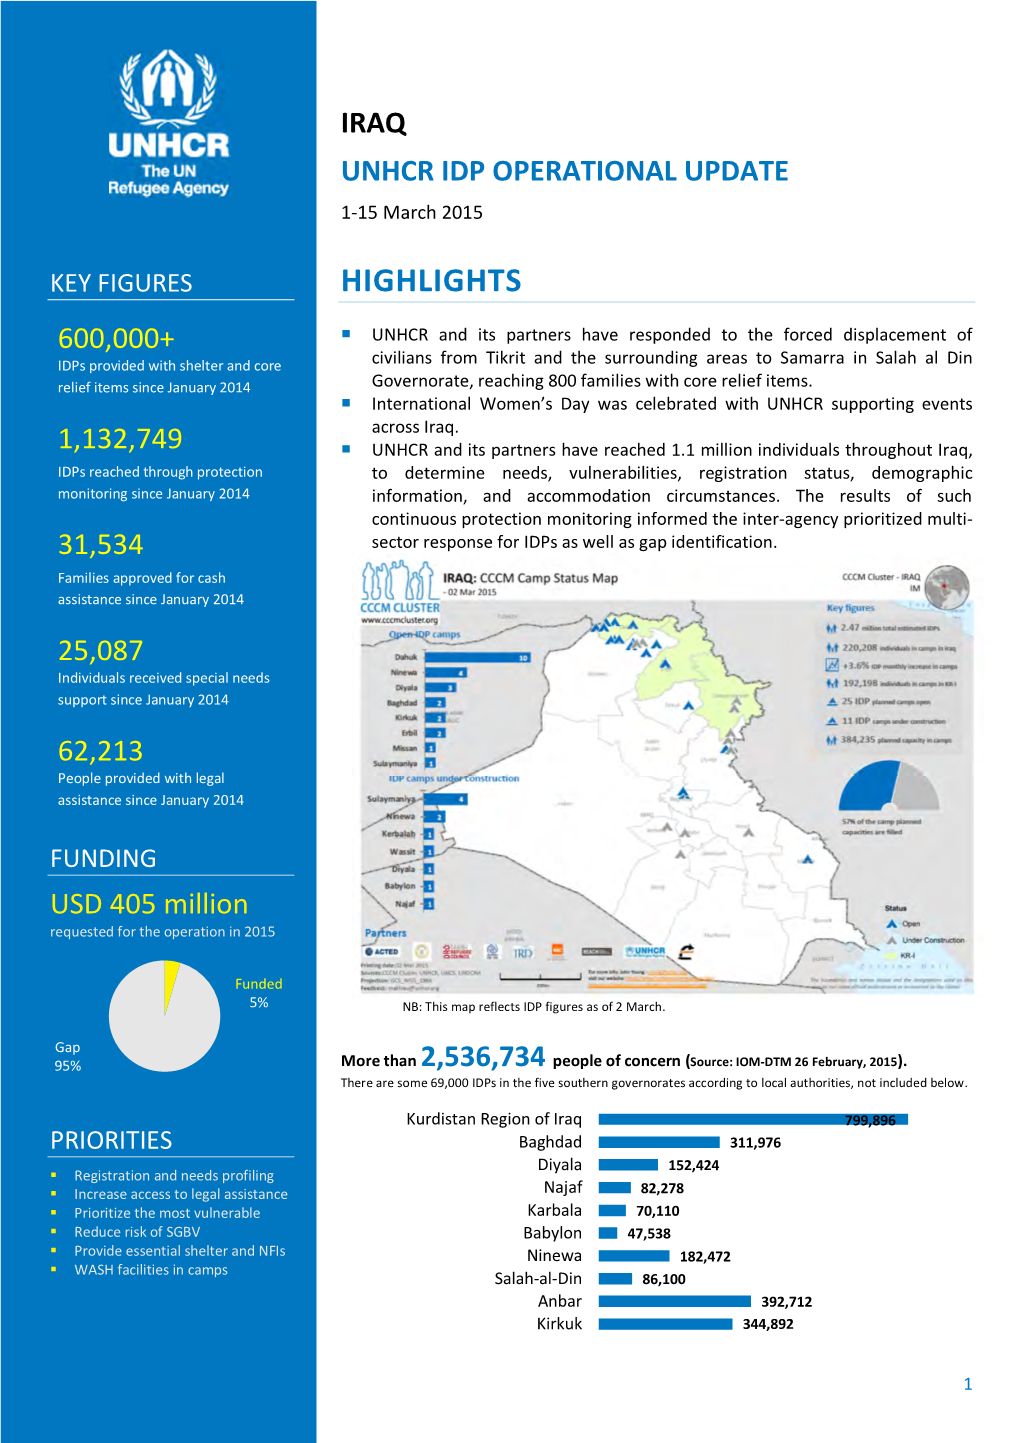 IRAQ UNHCR IDP OPERATIONAL UPDATE 1-15 March 2015